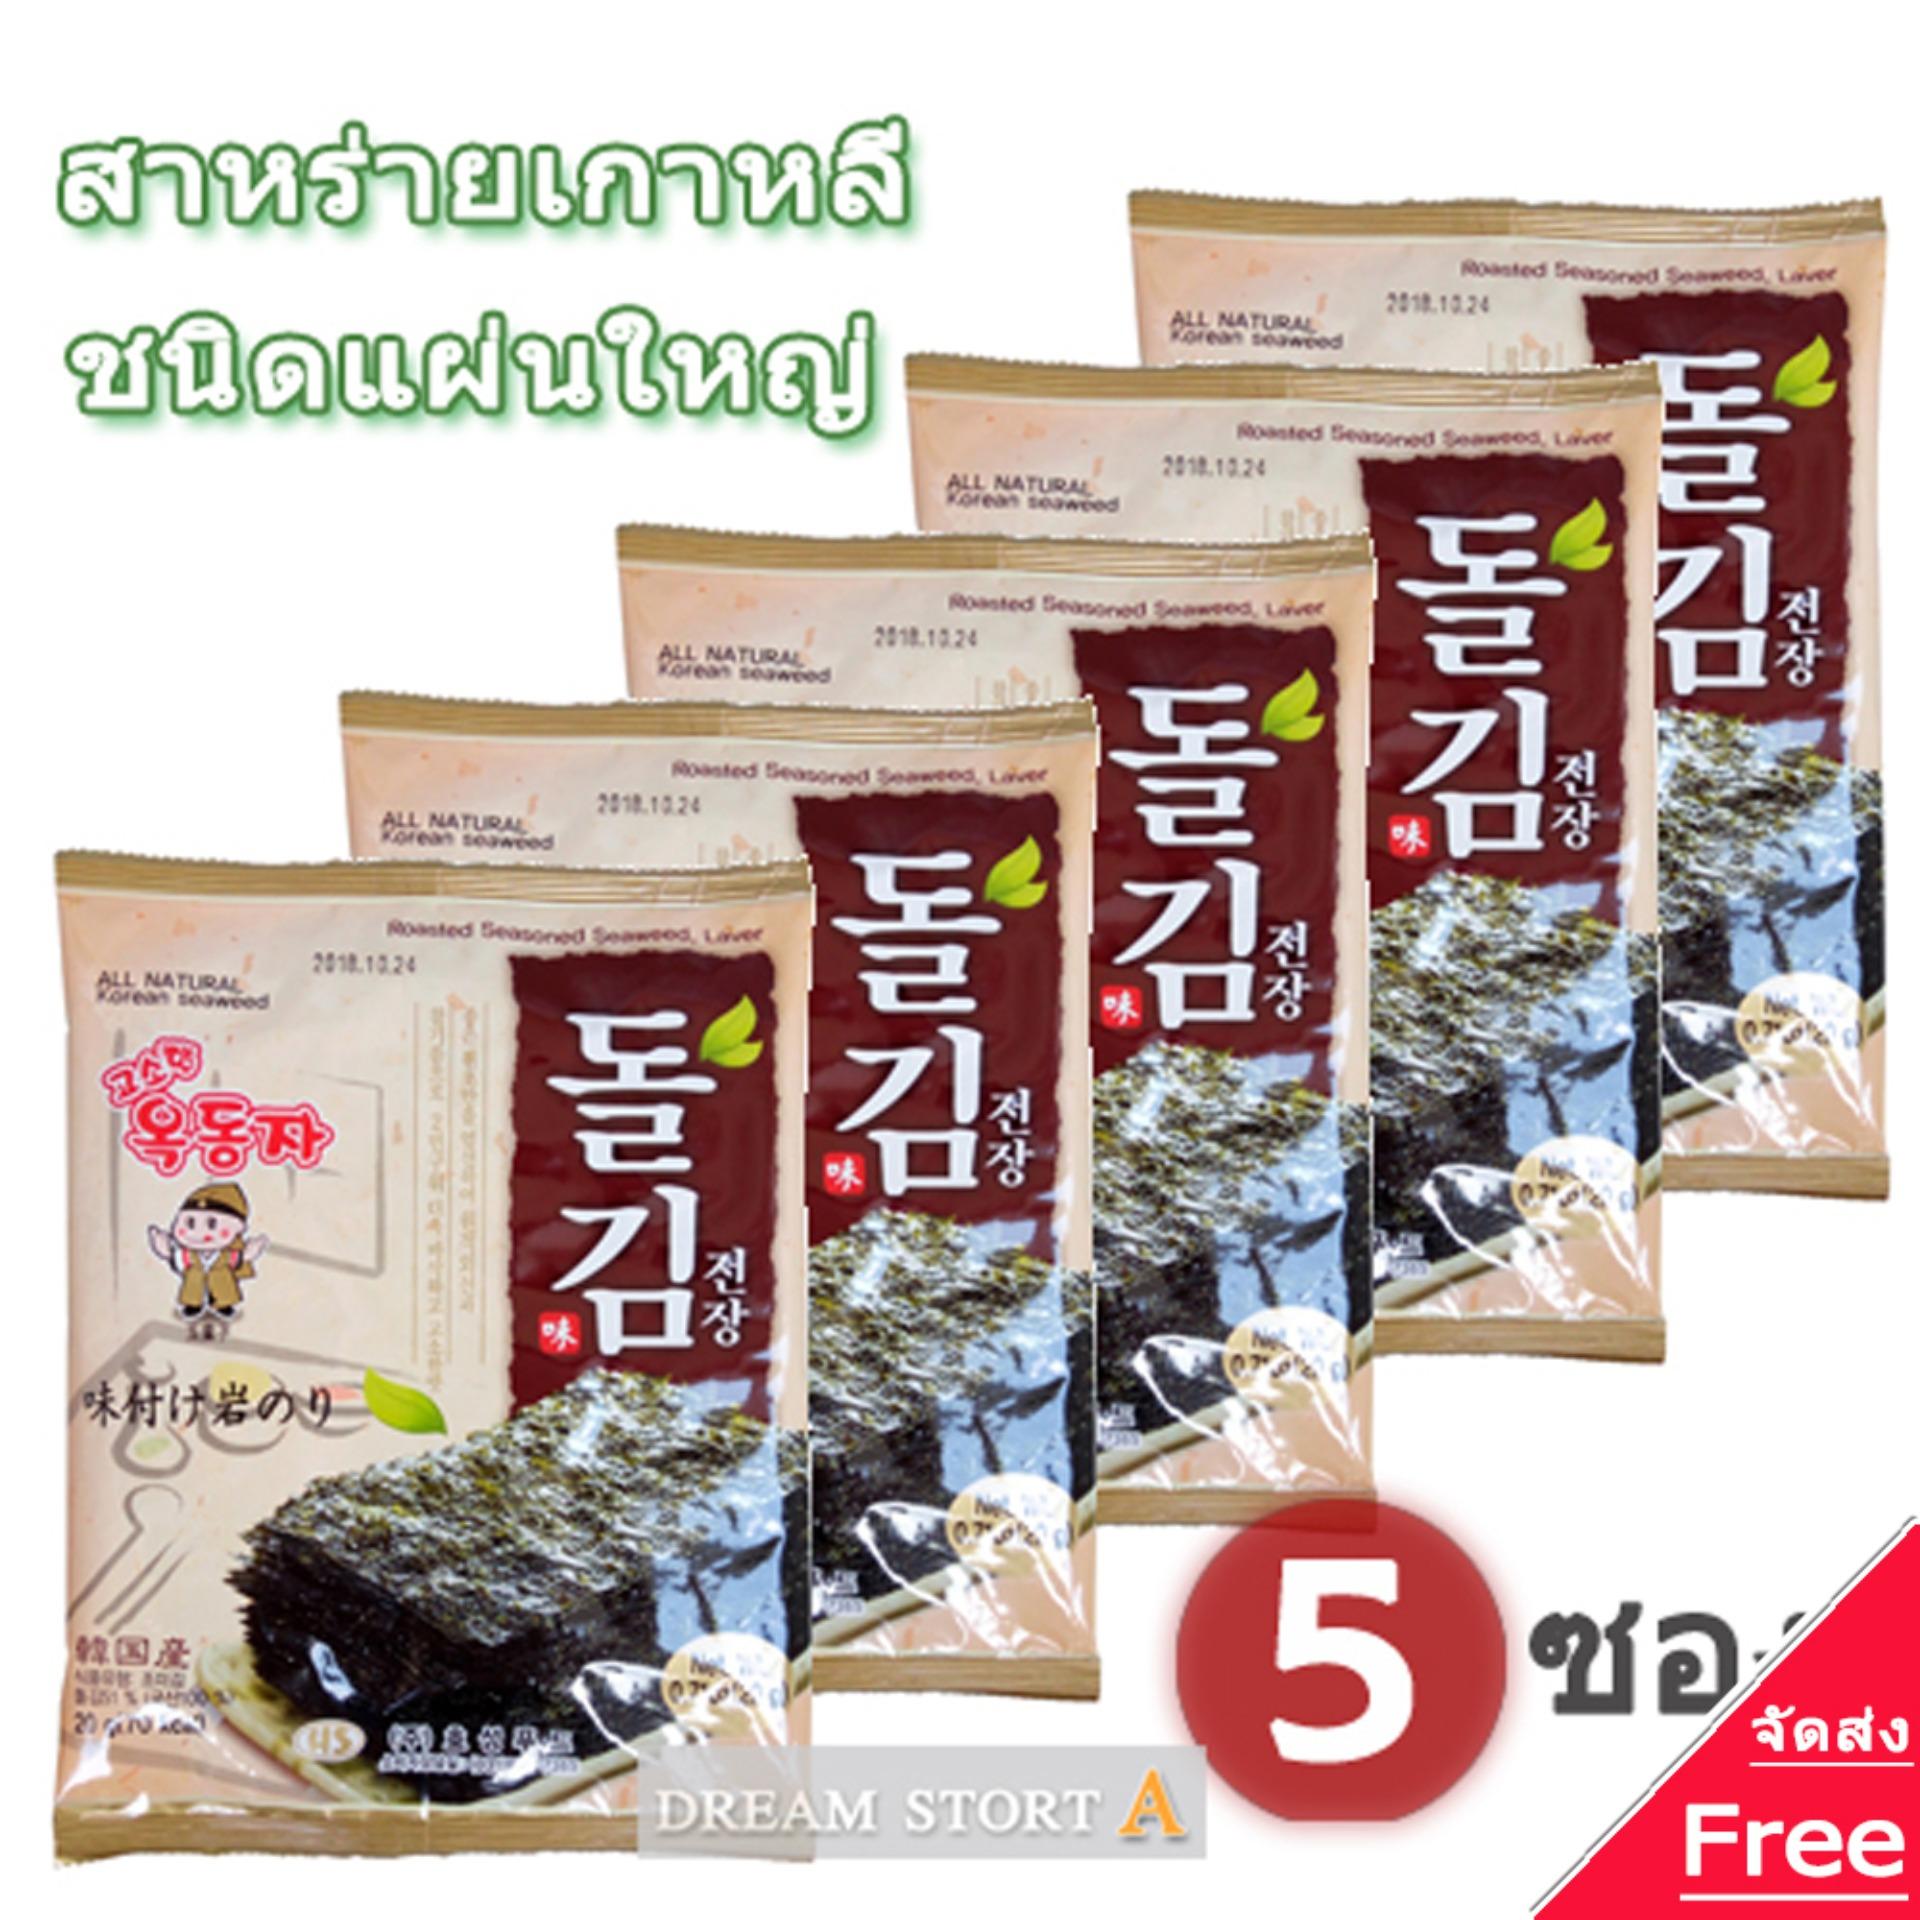 Seaweed Korea สาหร่ายเกาหลี ปรุงรส ชนิดแผ่นใหญ่ (5ซอง)